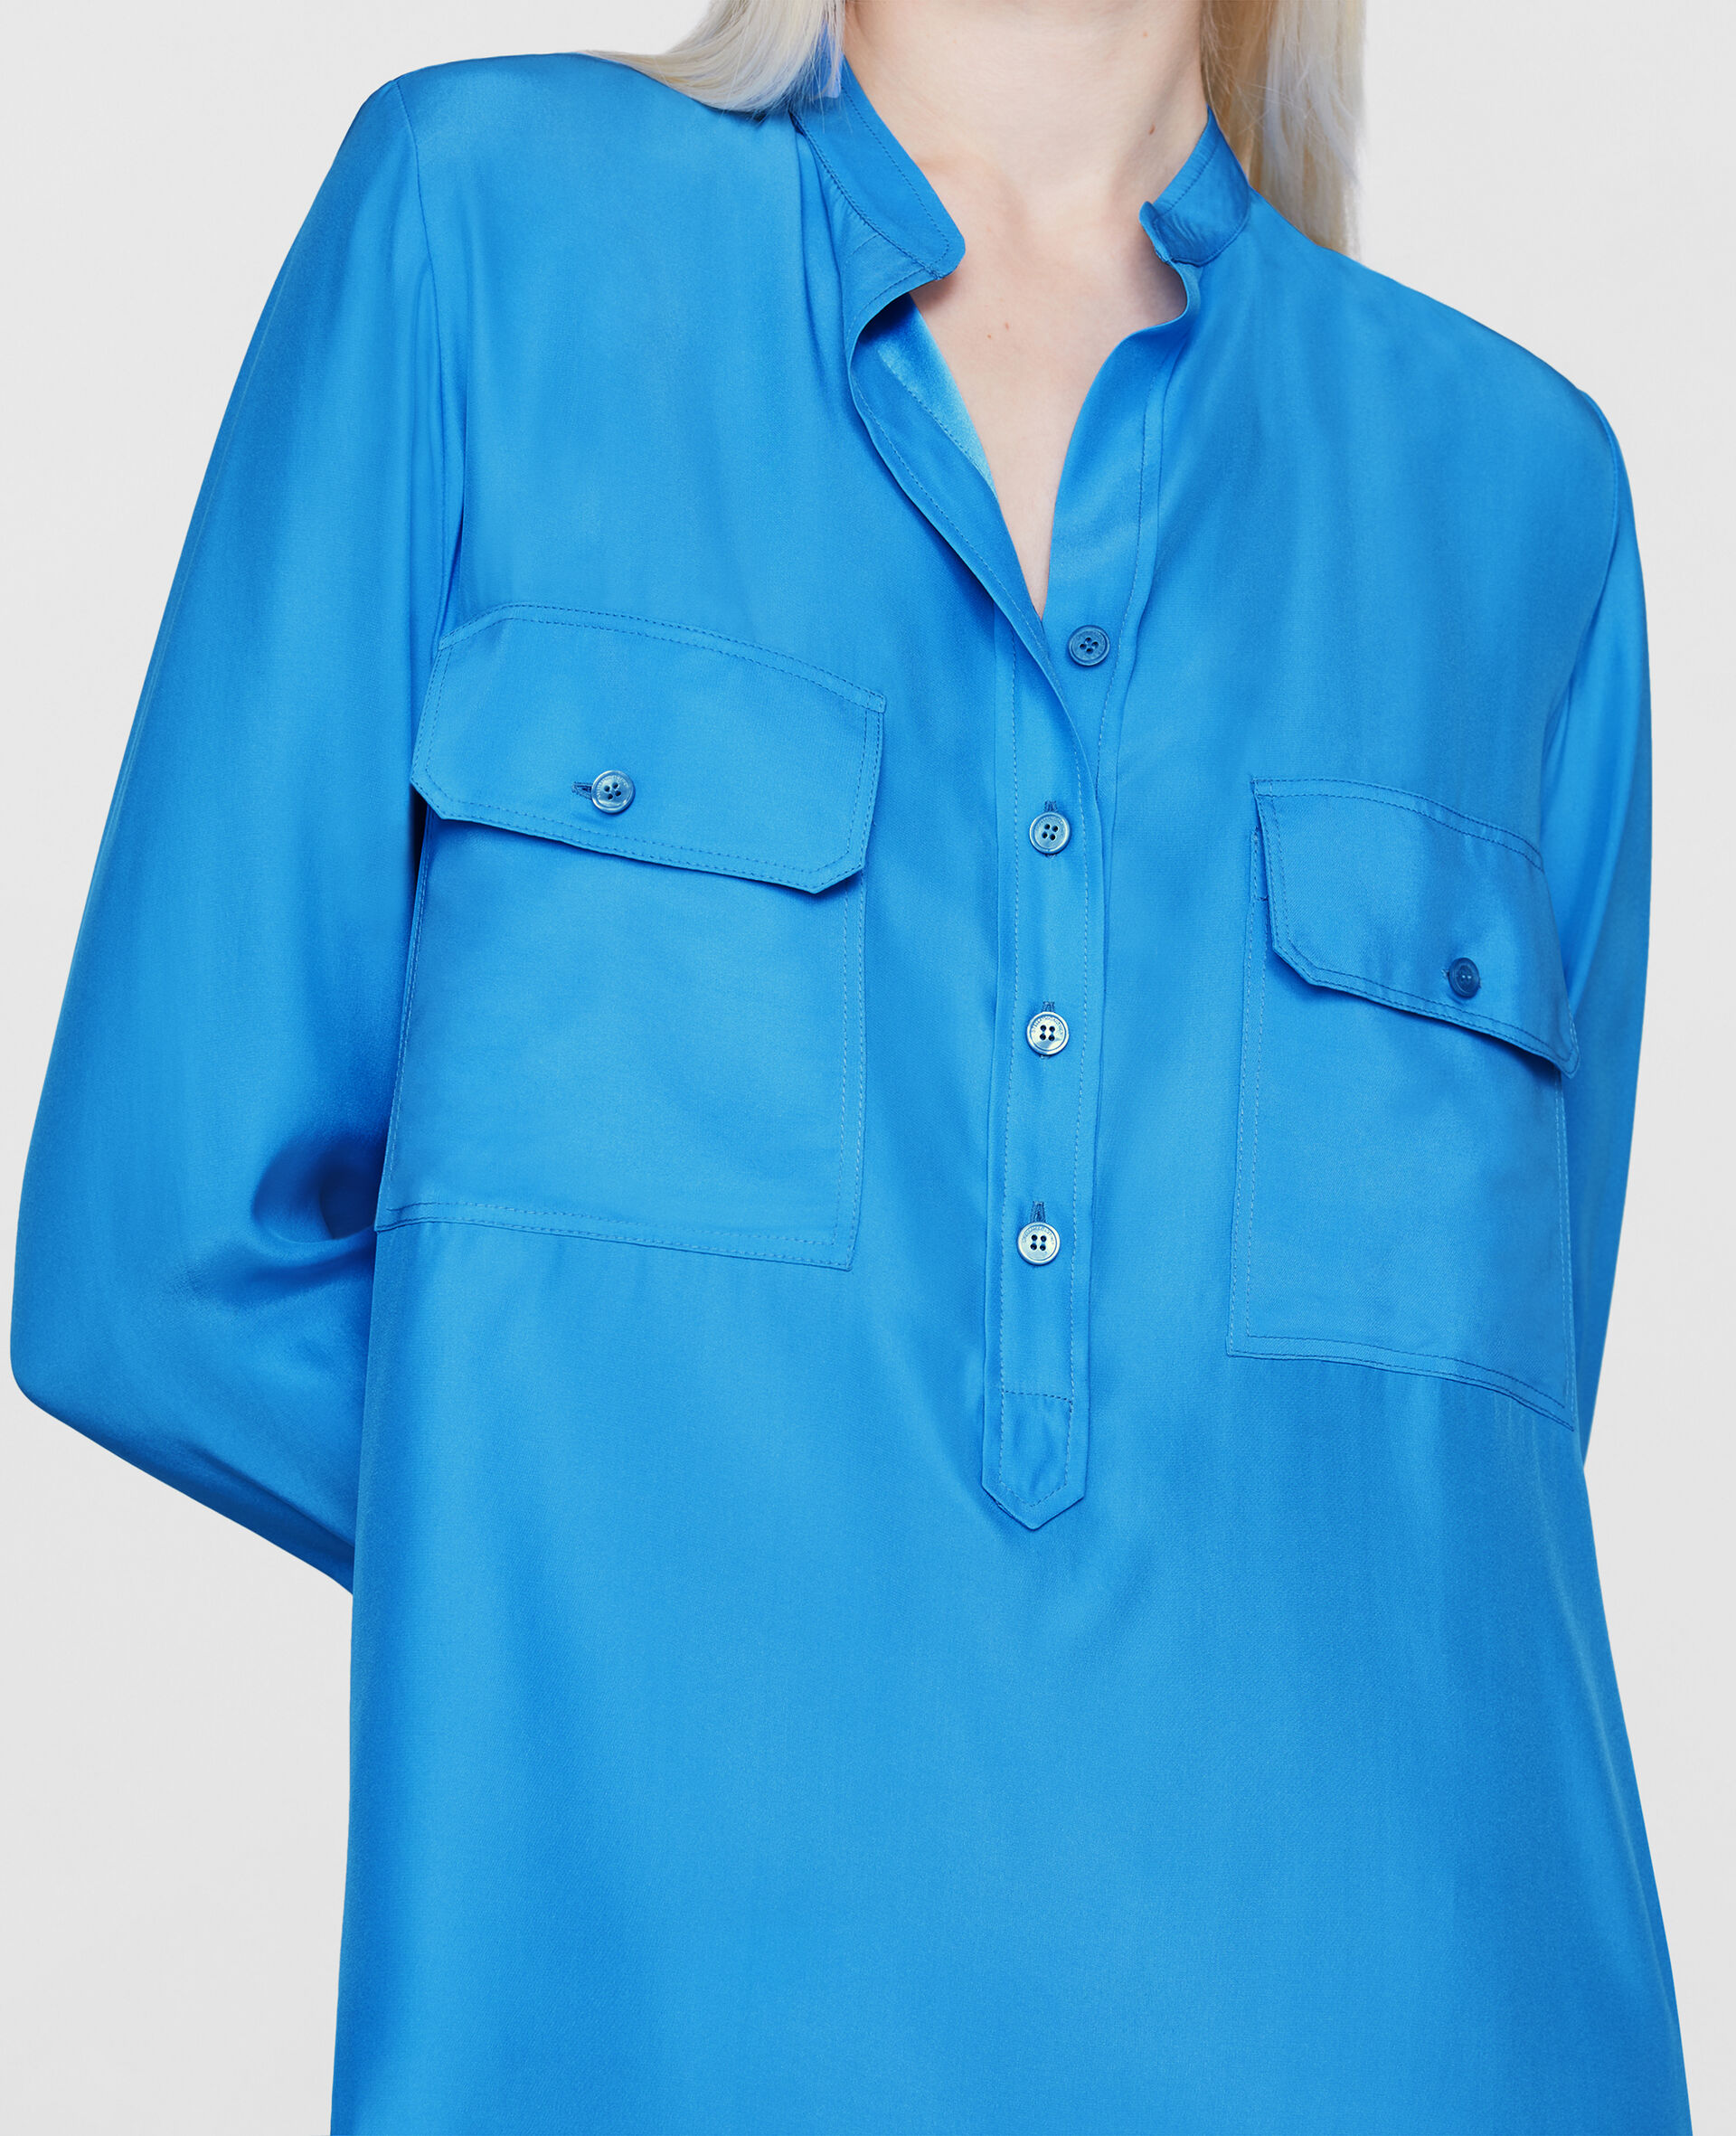 Satin Shirt-Blue-large image number 3